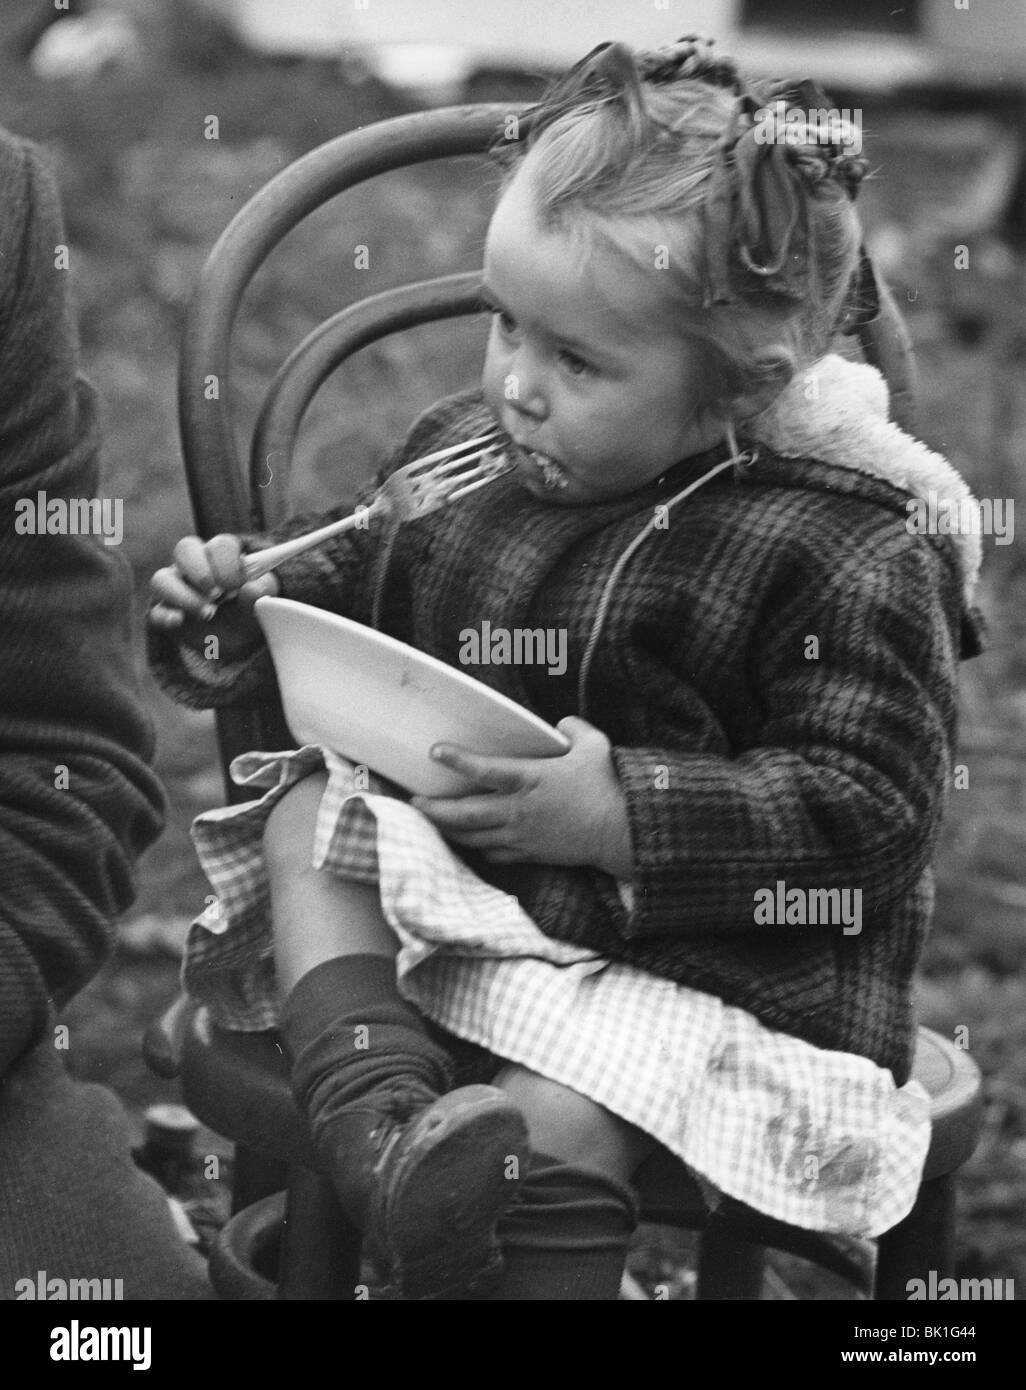 Gypsy girl eating, 1960s. Stock Photo